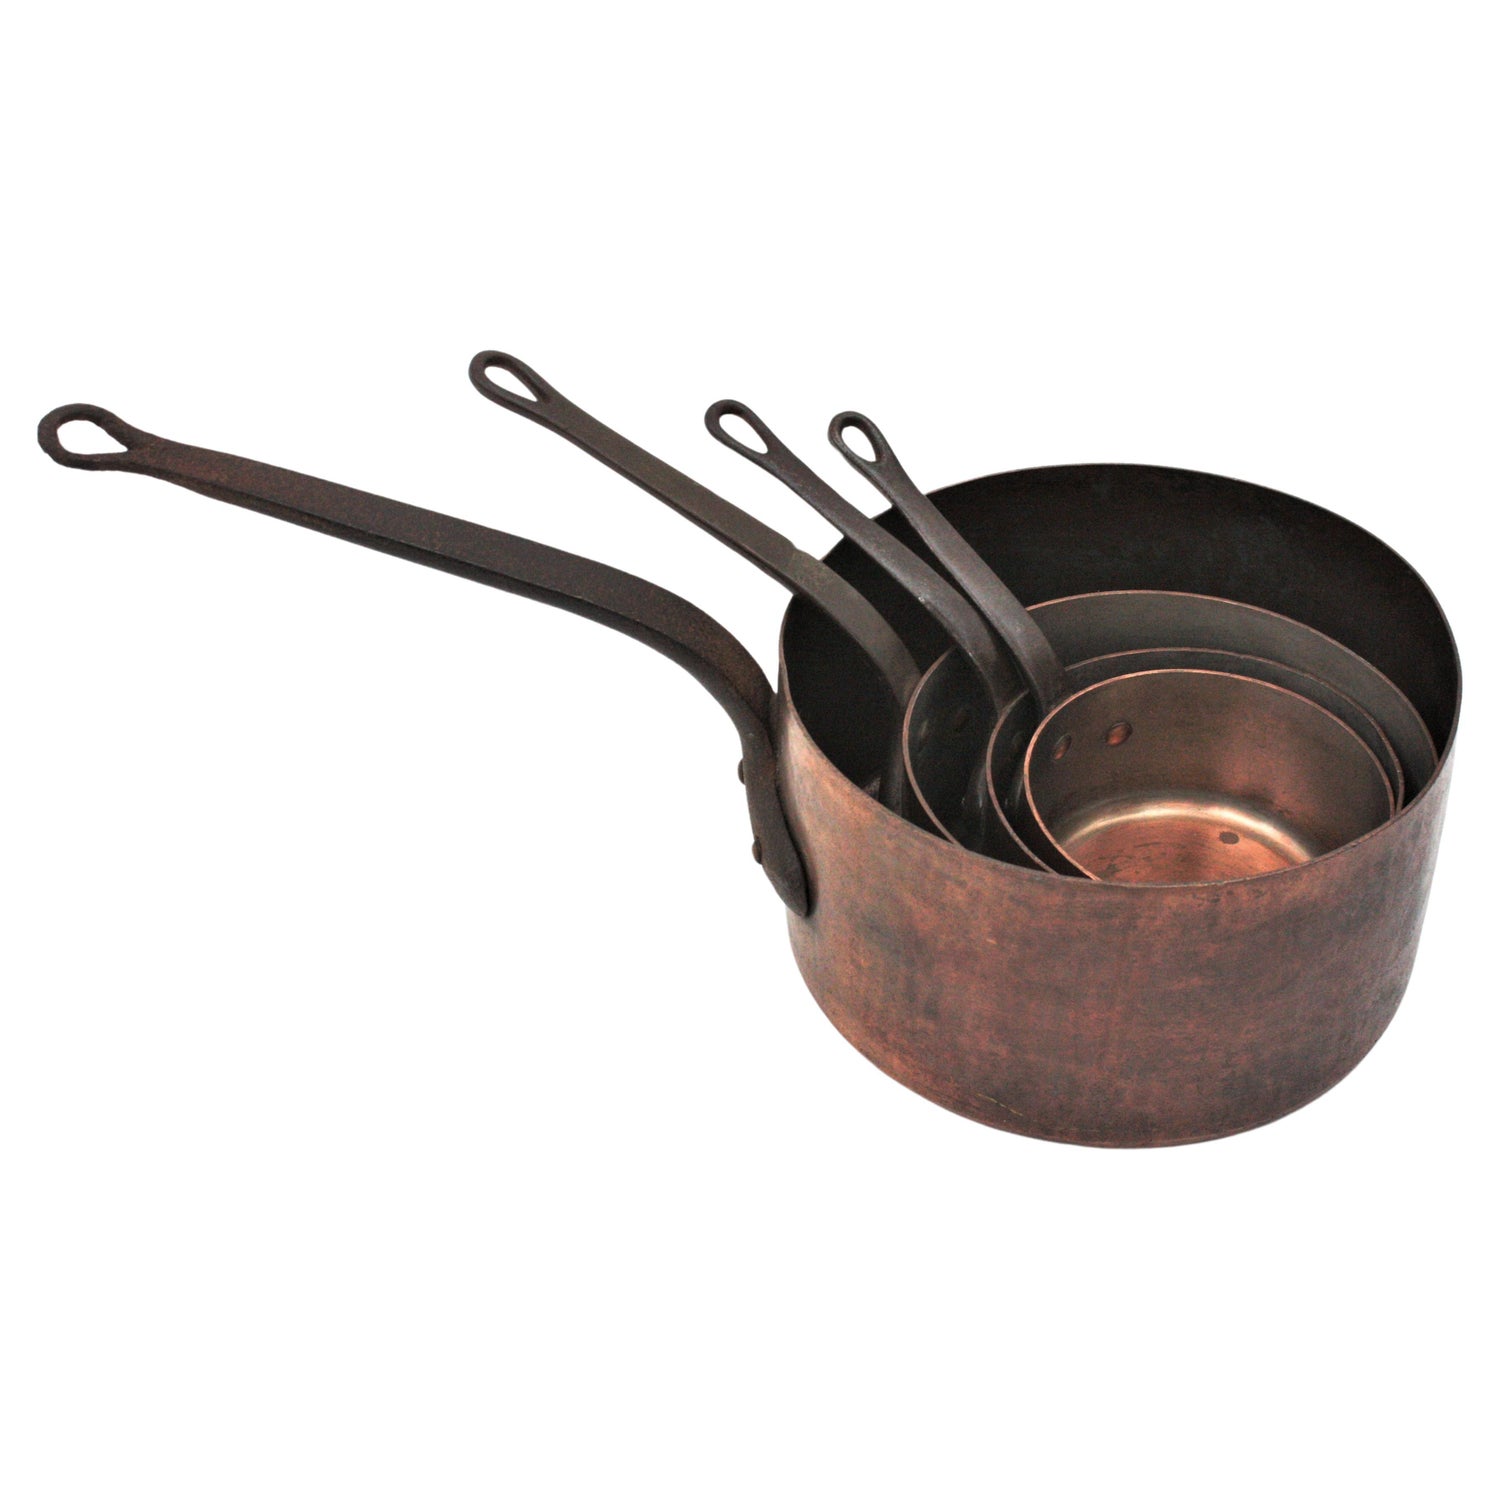 Old Dutch Solid Copper Mixing Bowl Set - 3 Piece Metallic Kitchen